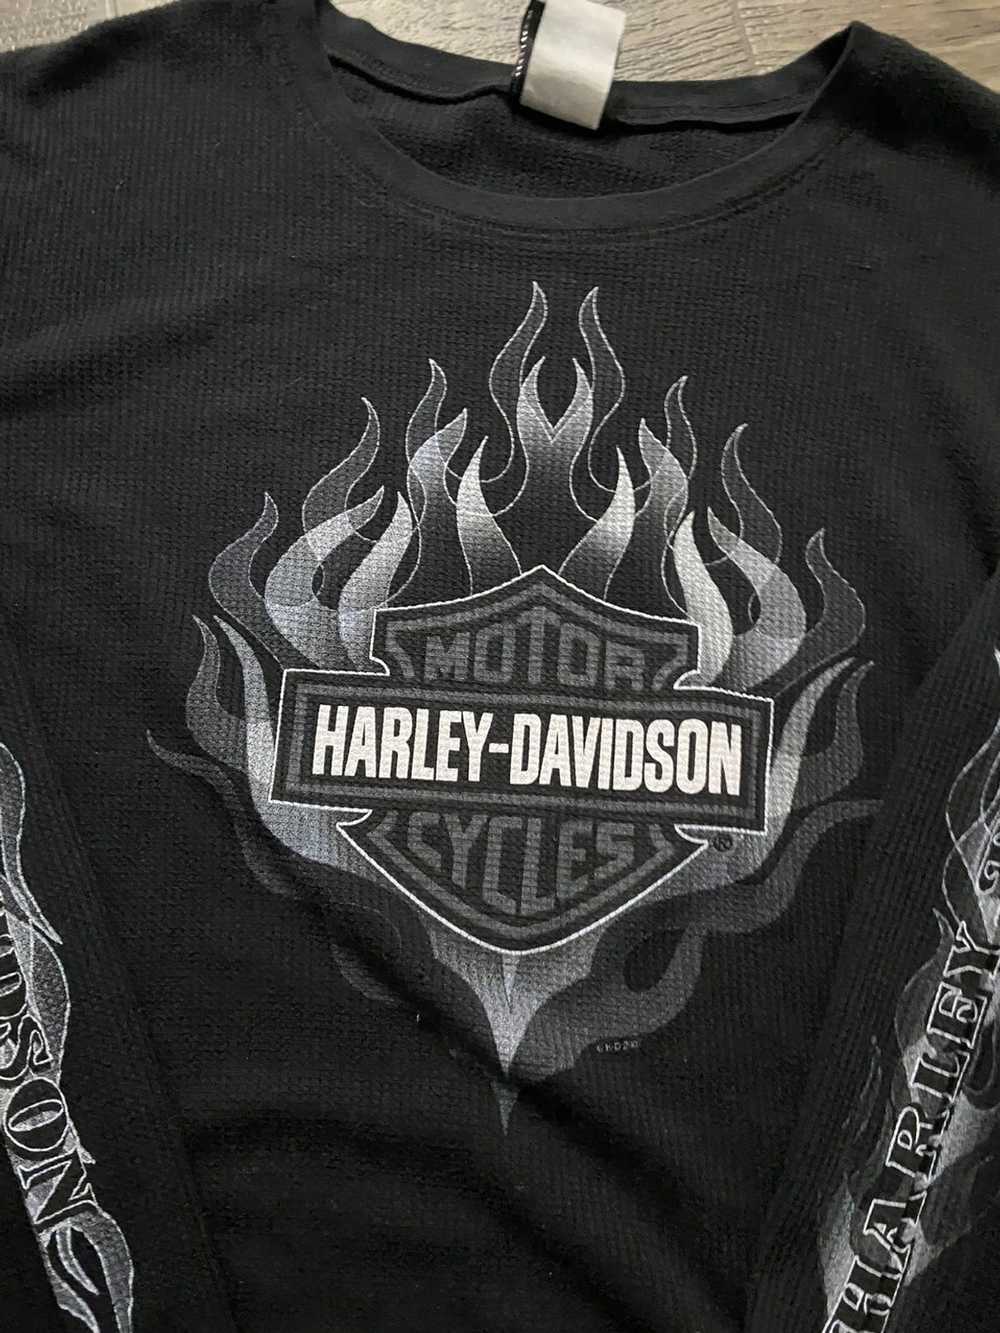 Harley Davidson Harley Davidson thermal - image 7